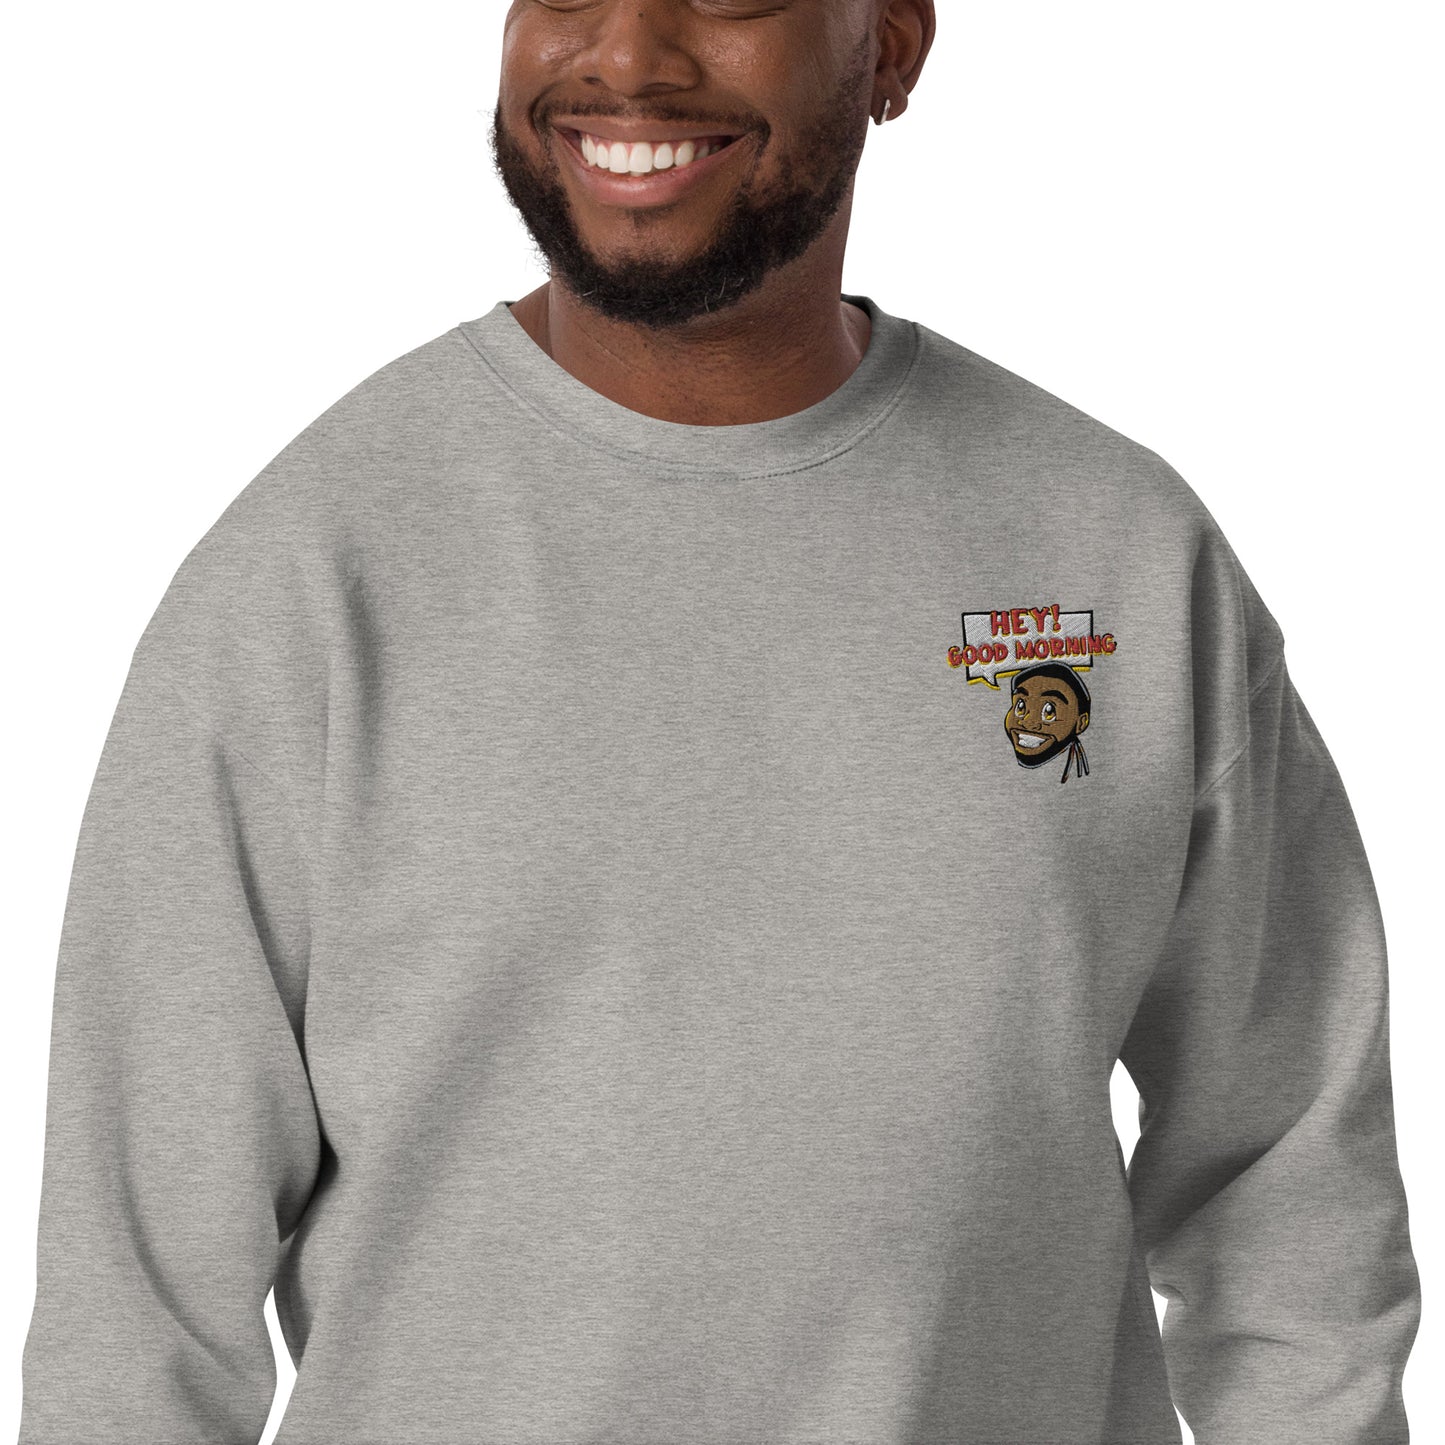 Men's Good Morning Sweatshirt